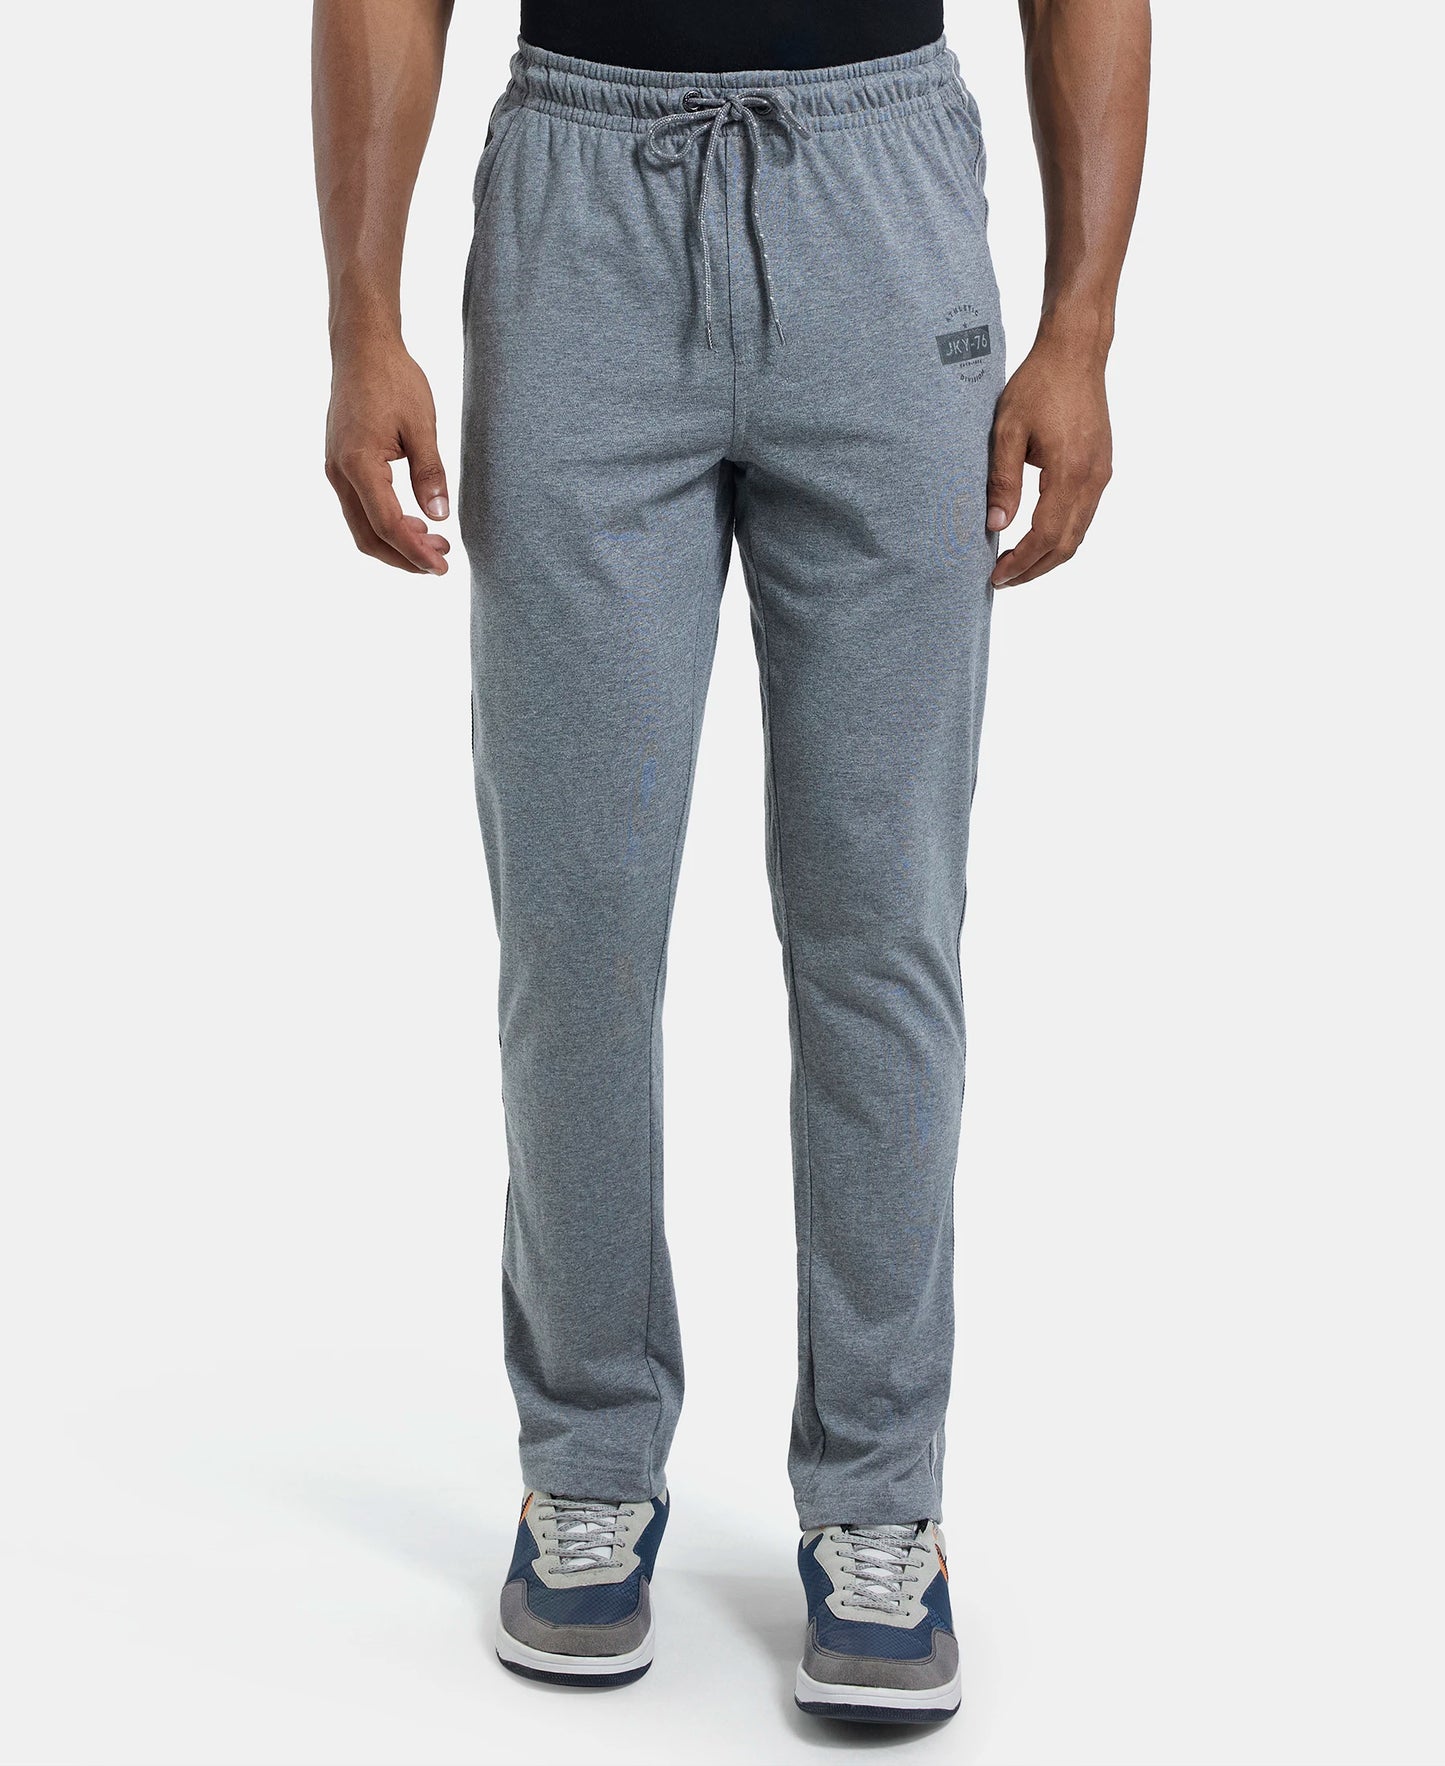 Super Combed Cotton Rich Slim Fit Trackpant with Side and Back Pockets - Grey Melange & Black-1